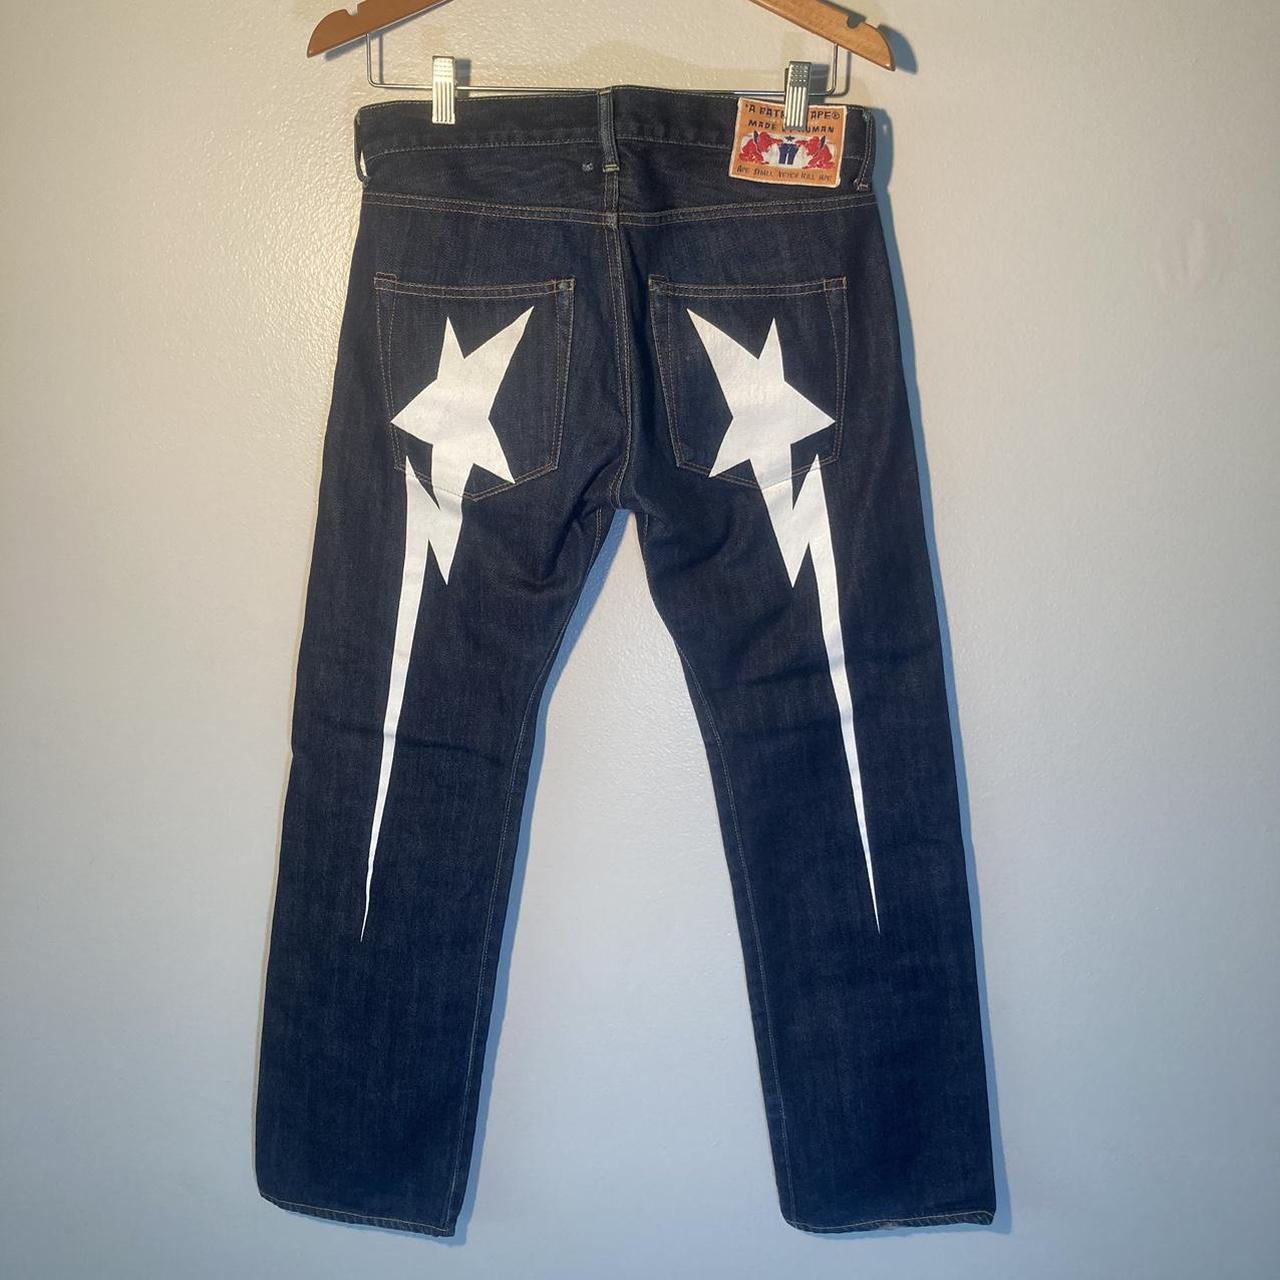 Rare Supreme x Levi's Black Star Denim Jeans